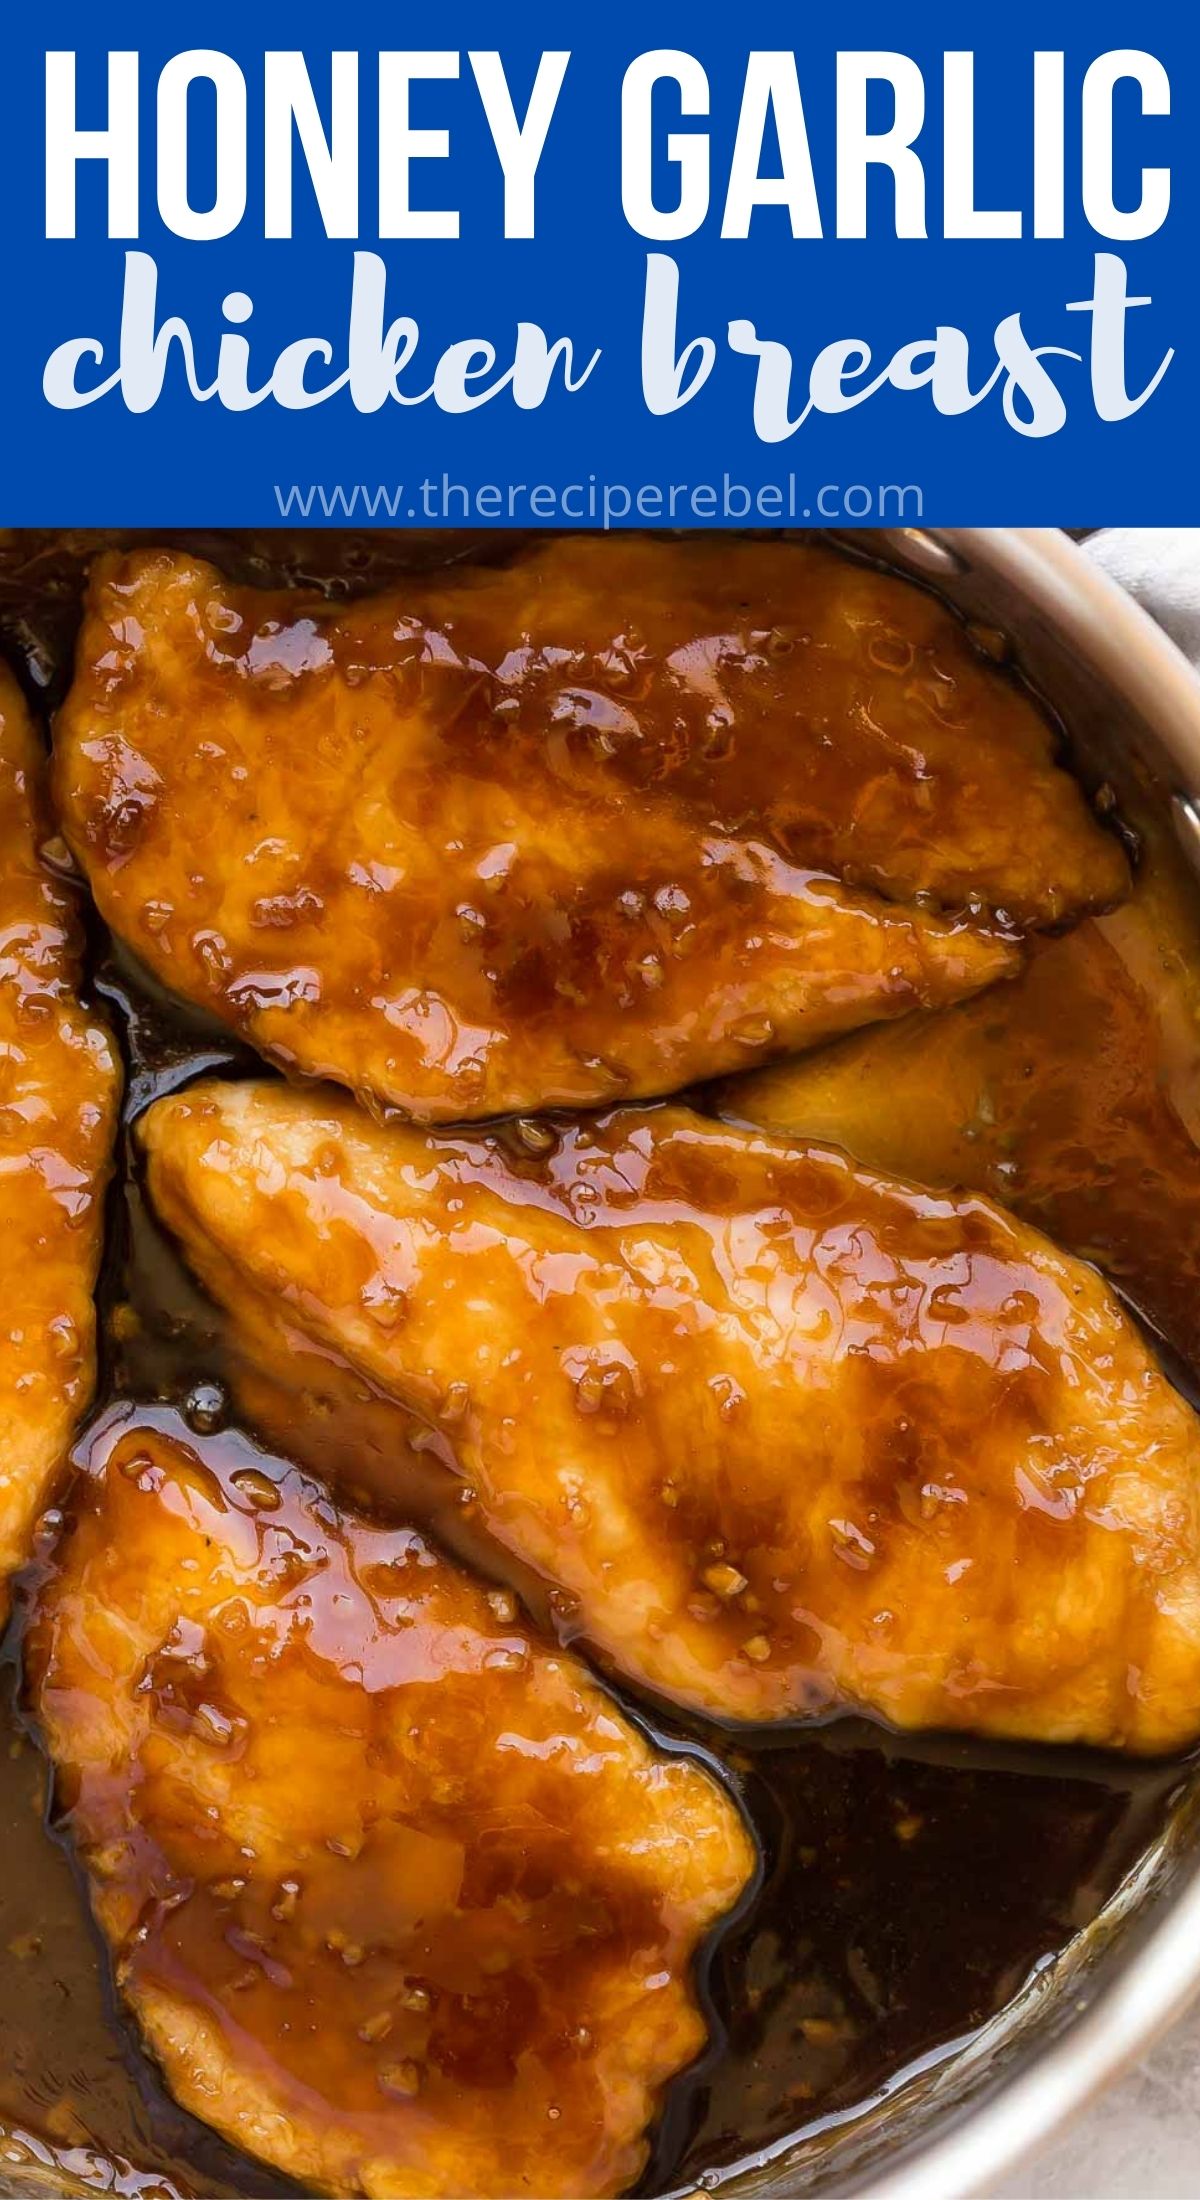 https://www.thereciperebel.com/wp-content/uploads/2021/09/honey-garlic-chicken-www.thereciperebel.com-pin2.jpg